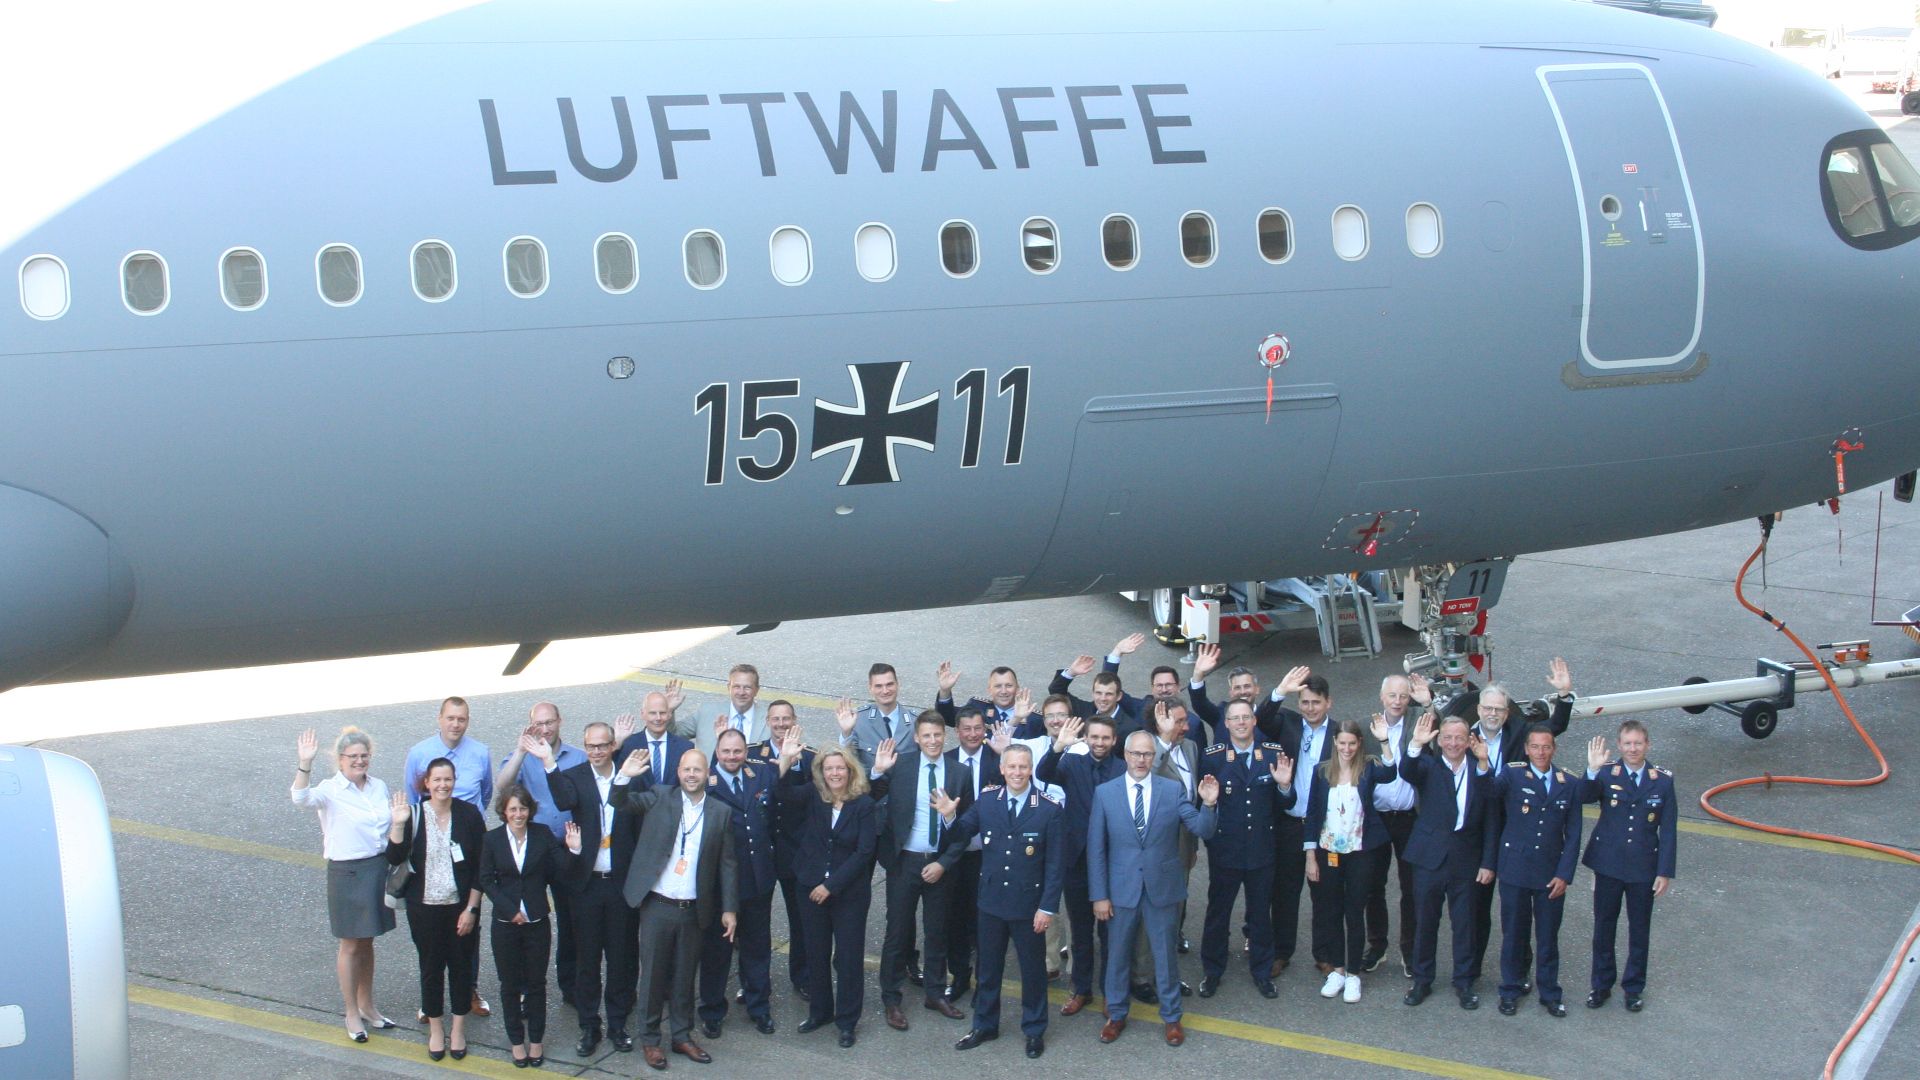 A crowd of Lufthansa Technik and Luftwaffe souls under the Luftwaffe's new A321LR - 15+11